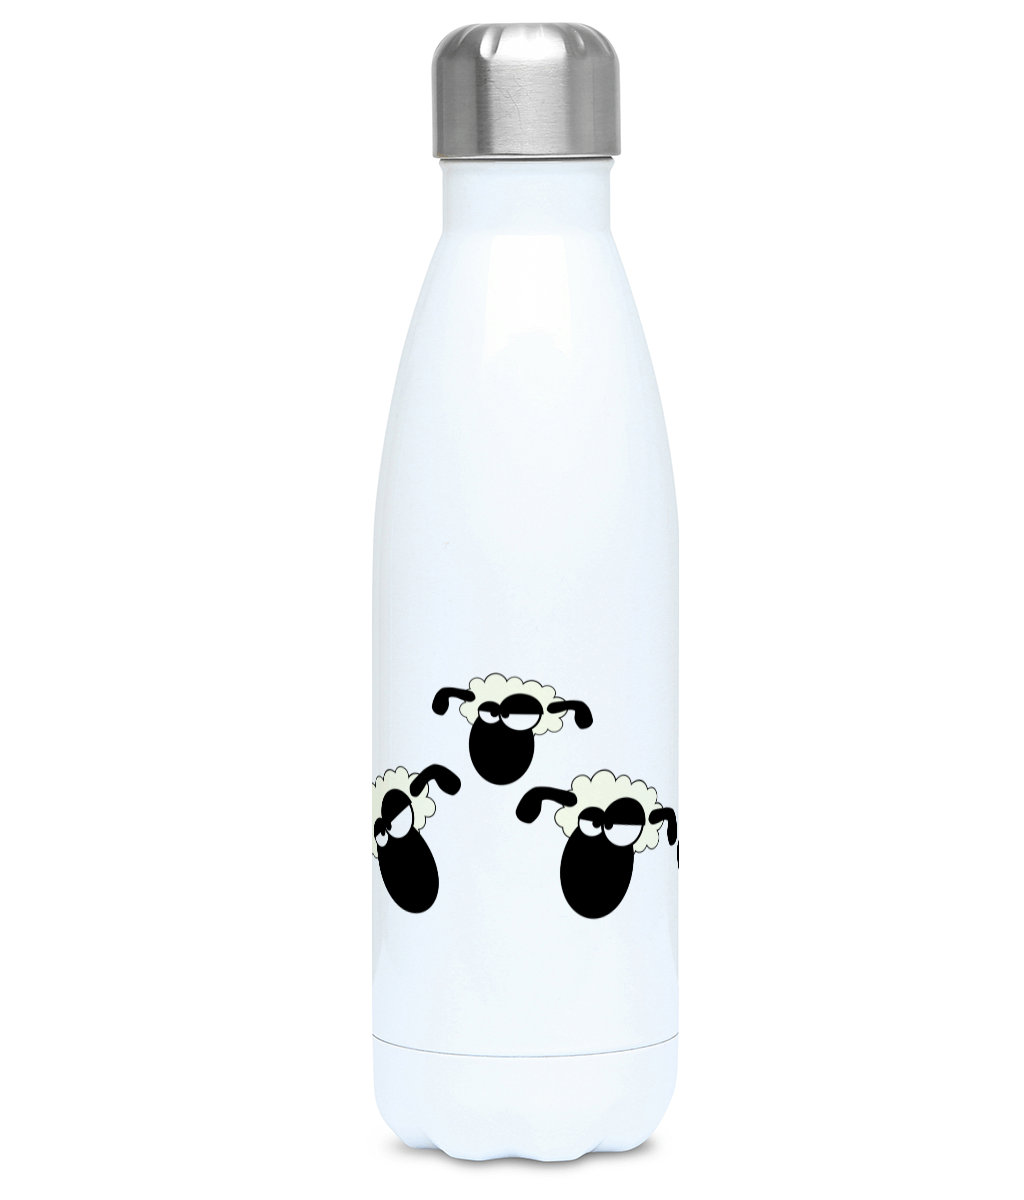 Water Bottle 'EWE&MOO', Metal Water Bottle, Drinks Bottle, Sports Bottle, Cow Bottle, Animal Water Bottle, Stainless Steel, Drinking Bottle tuppu.net/c320adf4 #giftsforchildren #Phonecases #sheep #Clothing #kidsclothing #gifts #animalgifts #500mlBottle